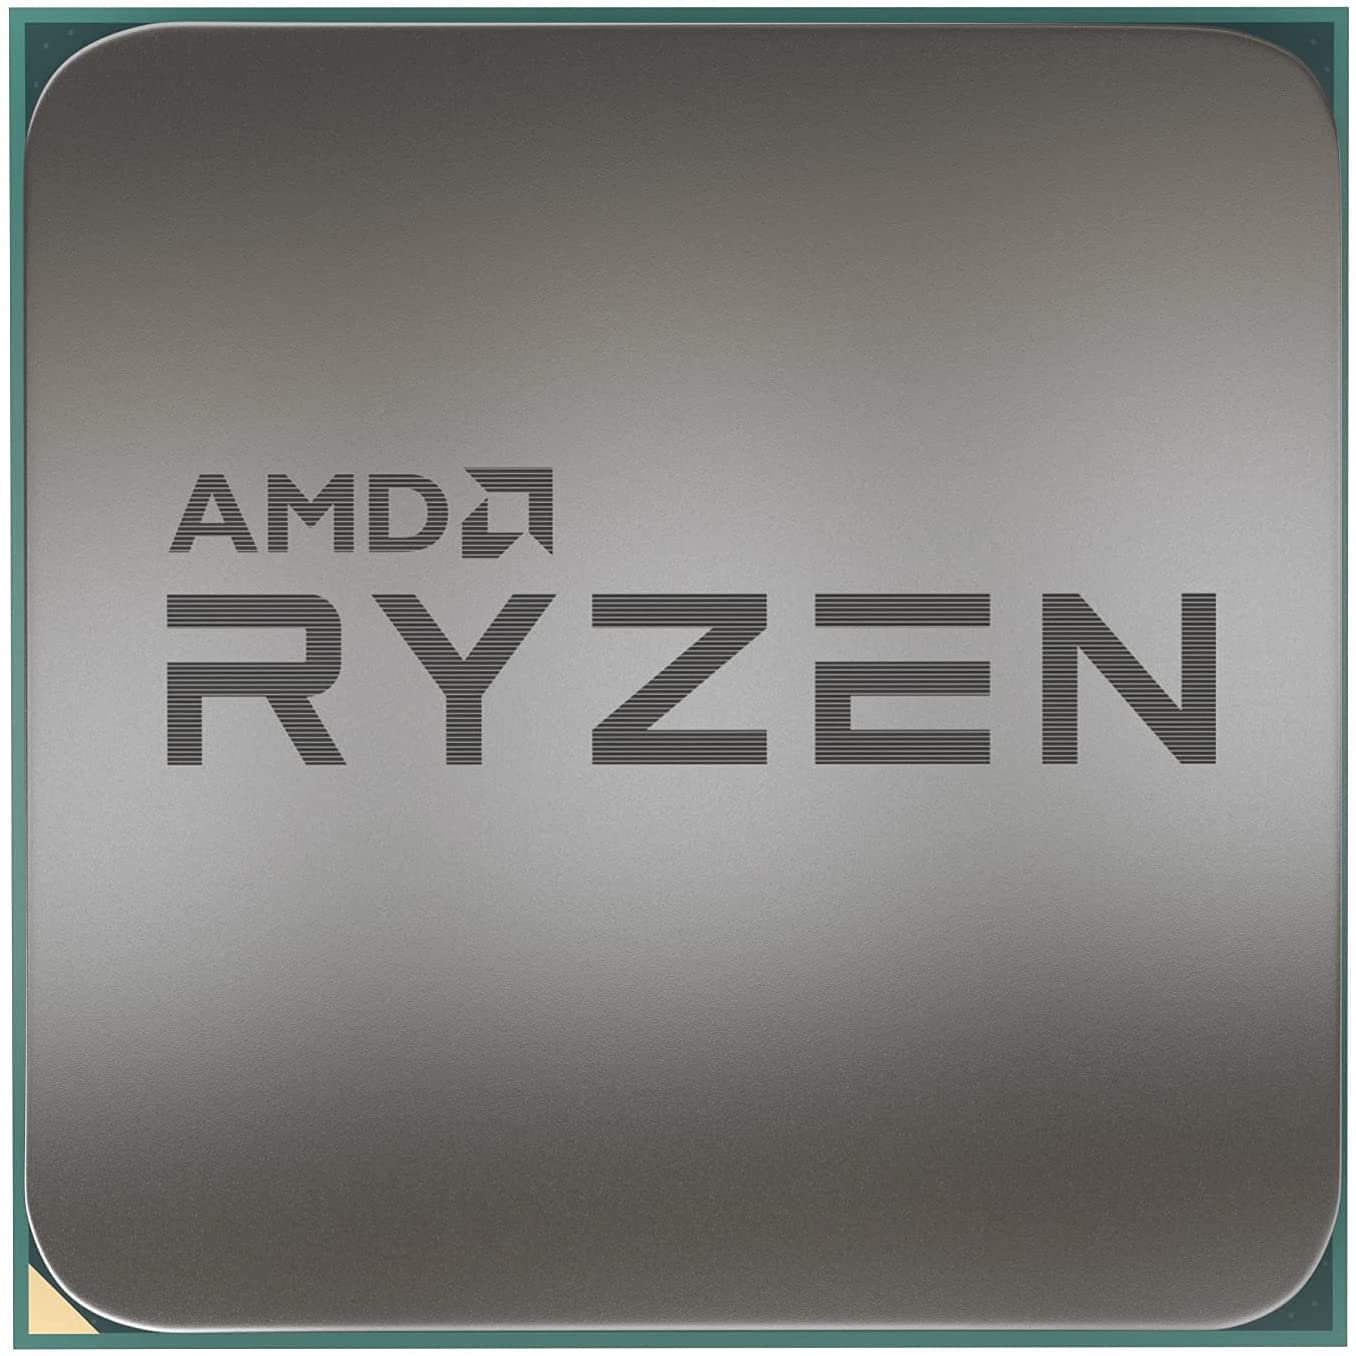 AMD Ryzen 9 5900X 12-core, 24-thread unlocked desktop processor without cooler